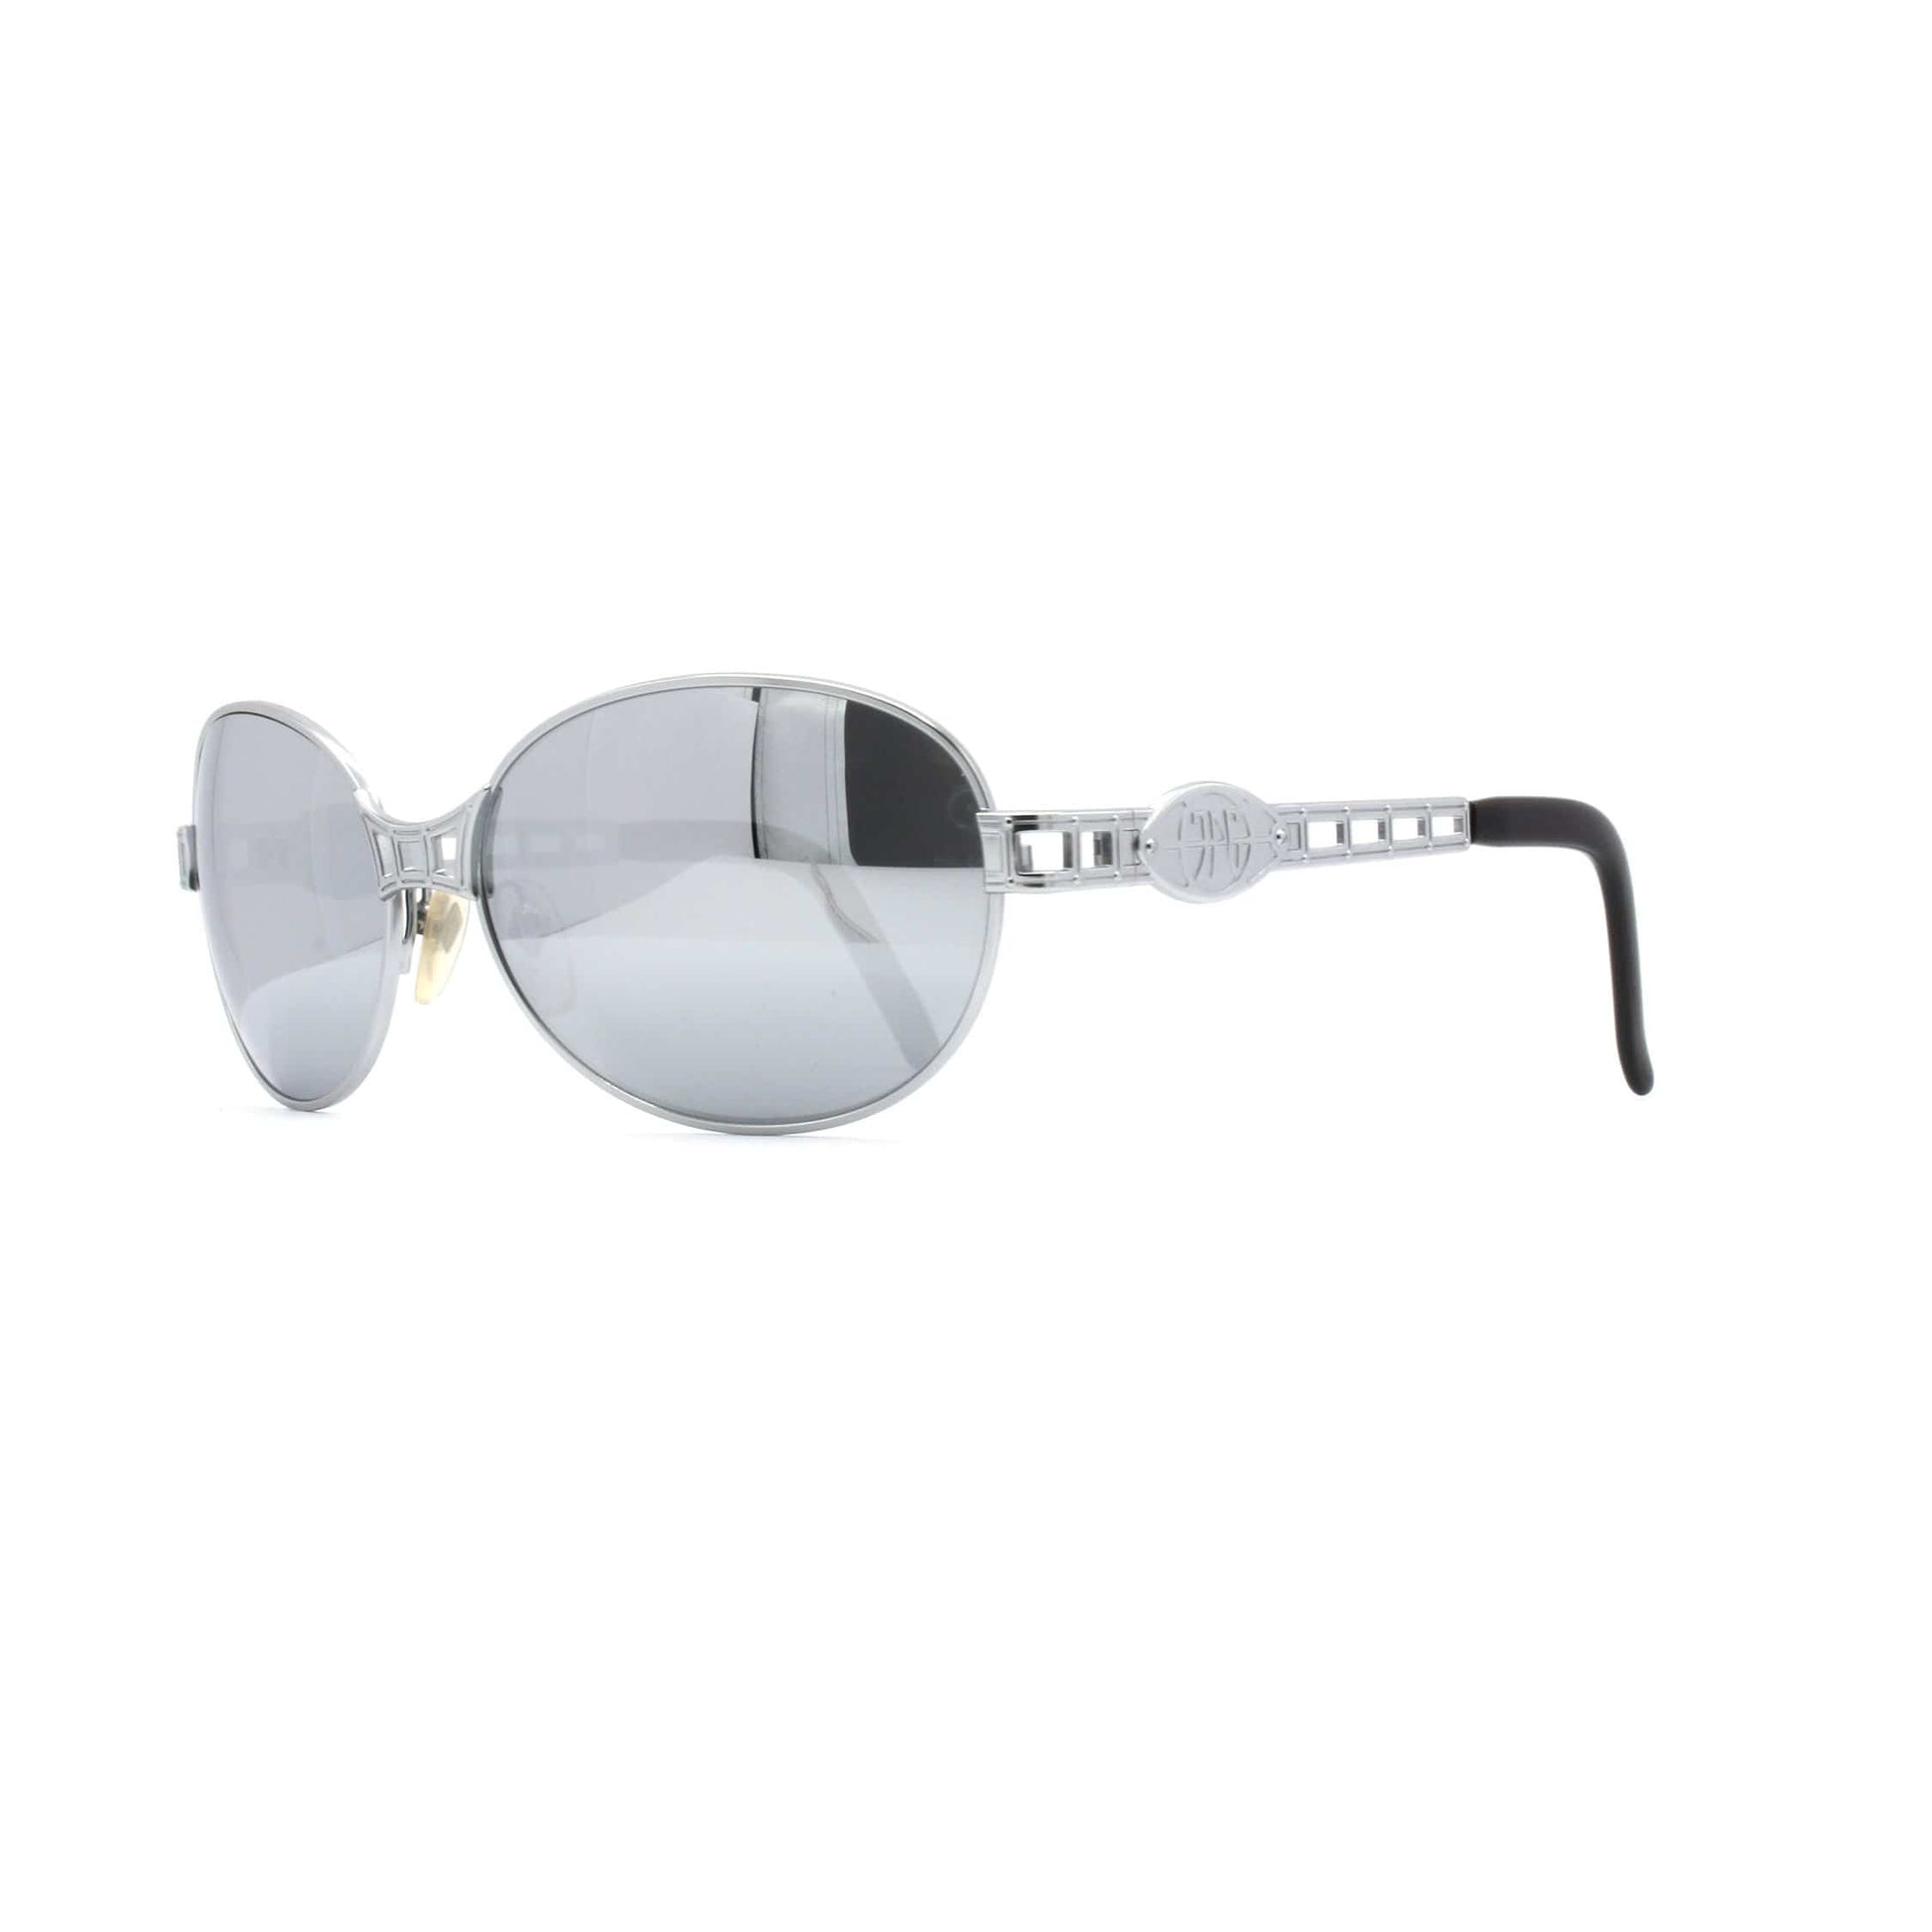 Silver Vintage Jean Paul Gaultier 58-6112 Sunglasses RSTKD Vintage